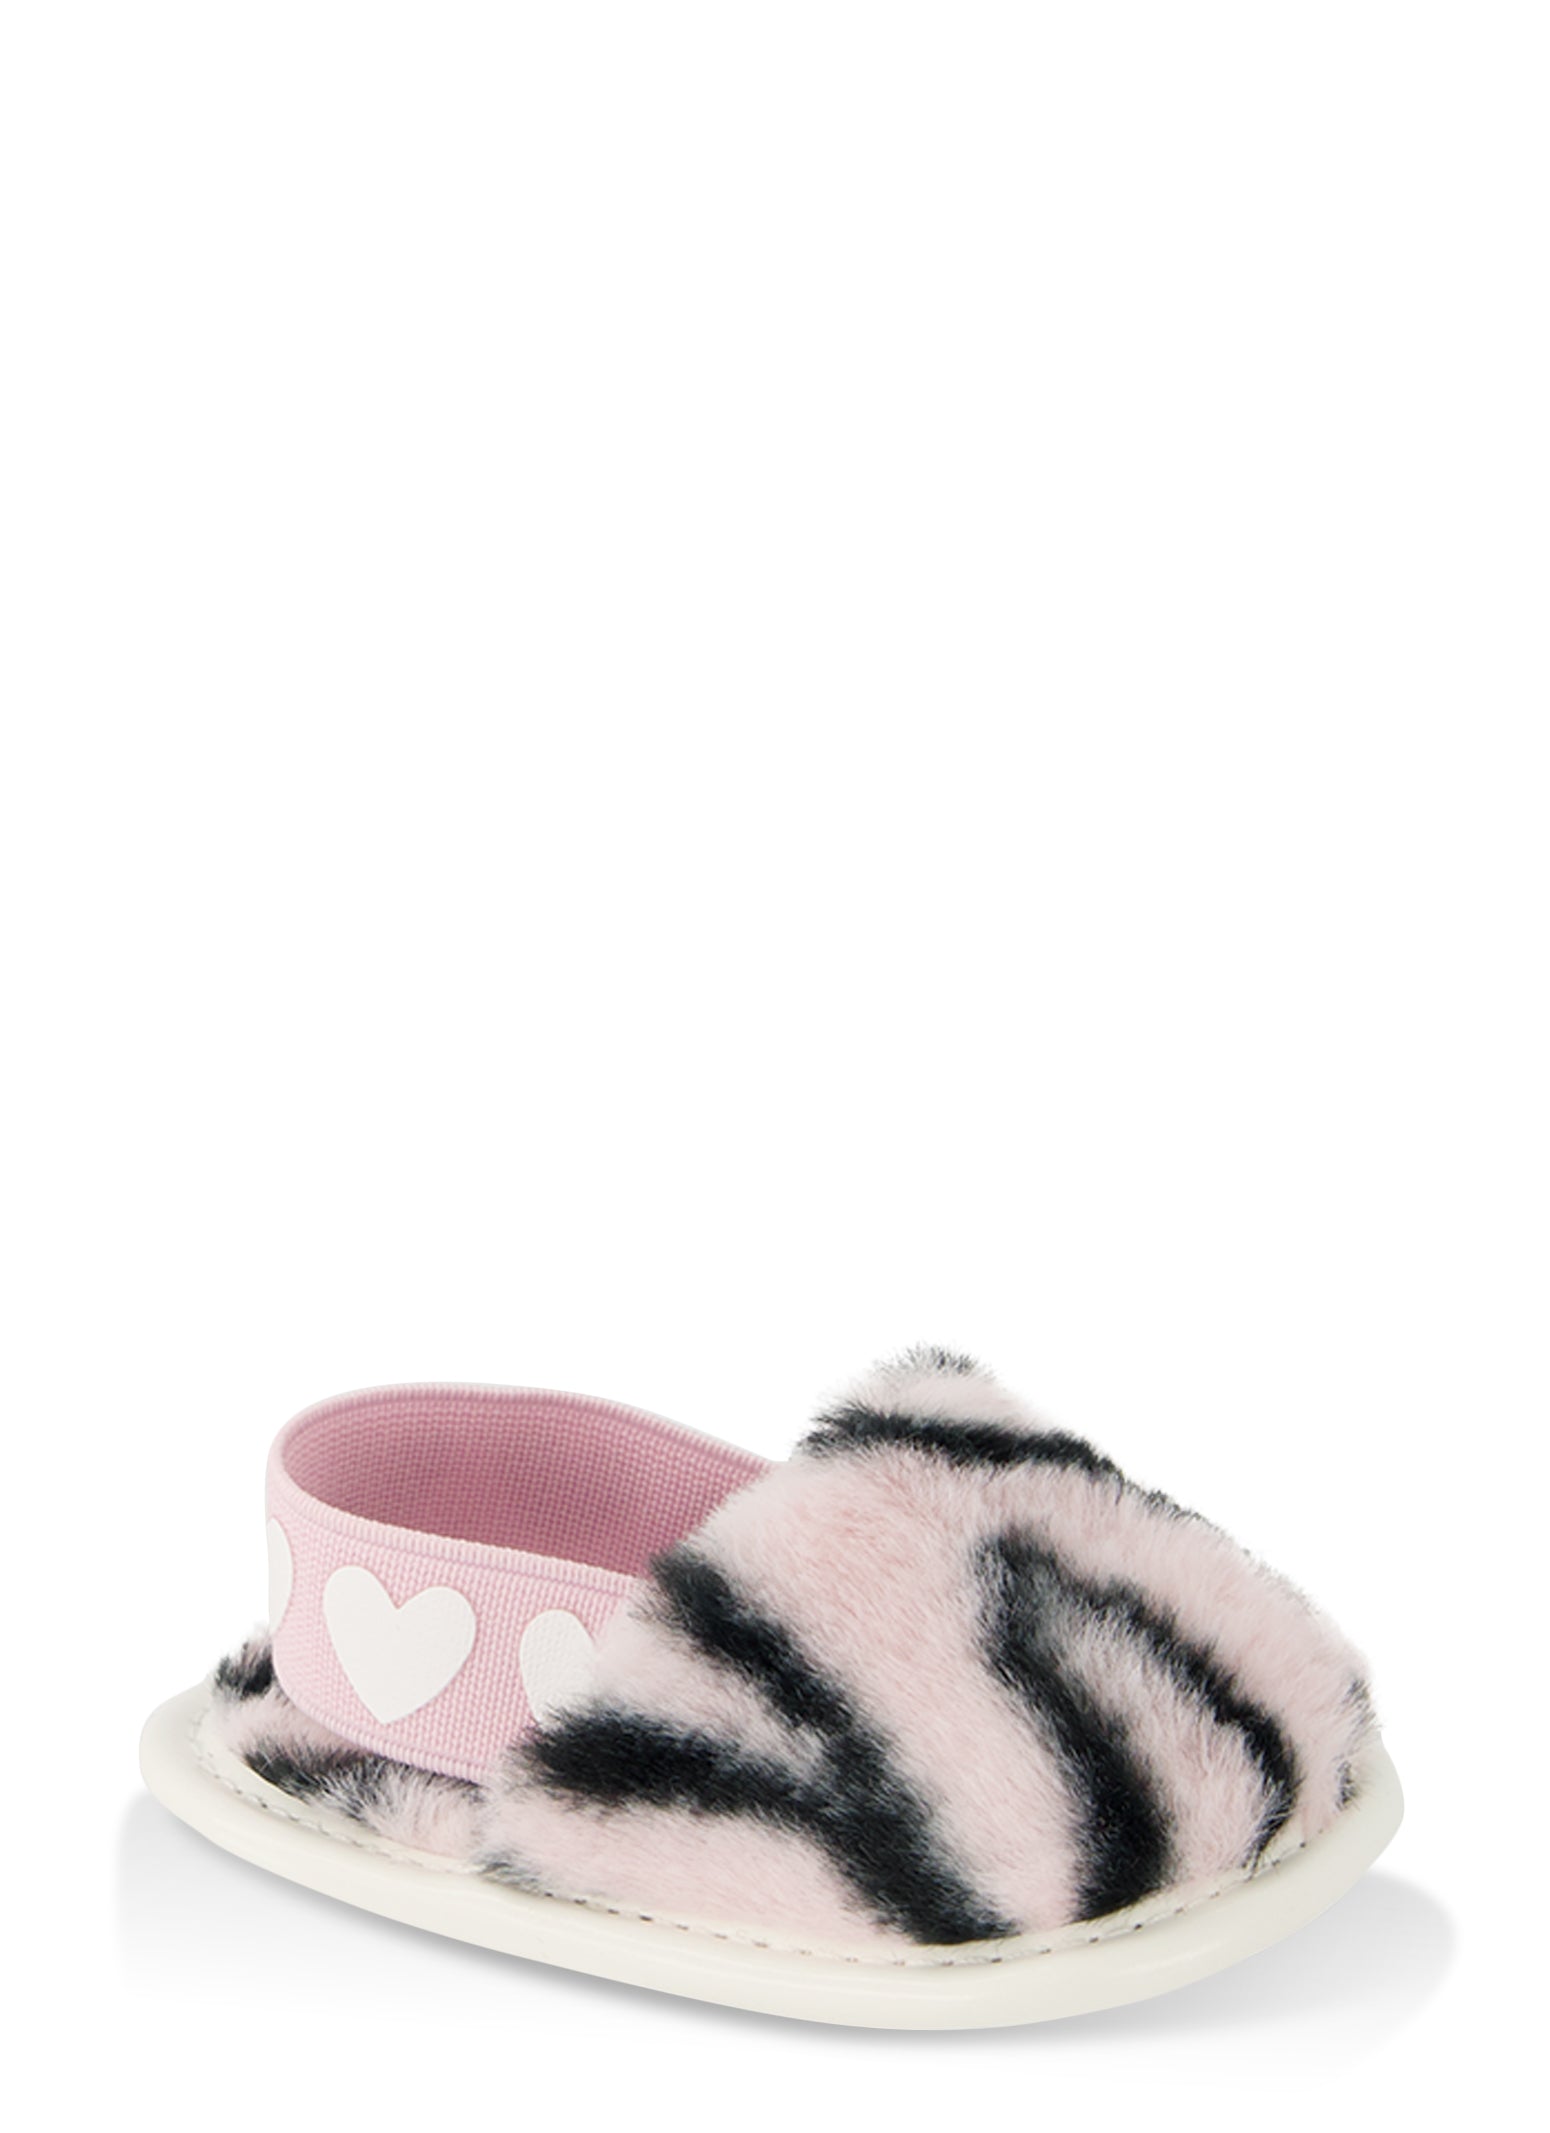 Faux Fur Louis Vuitton Slippers  Louis vuitton slippers, Print